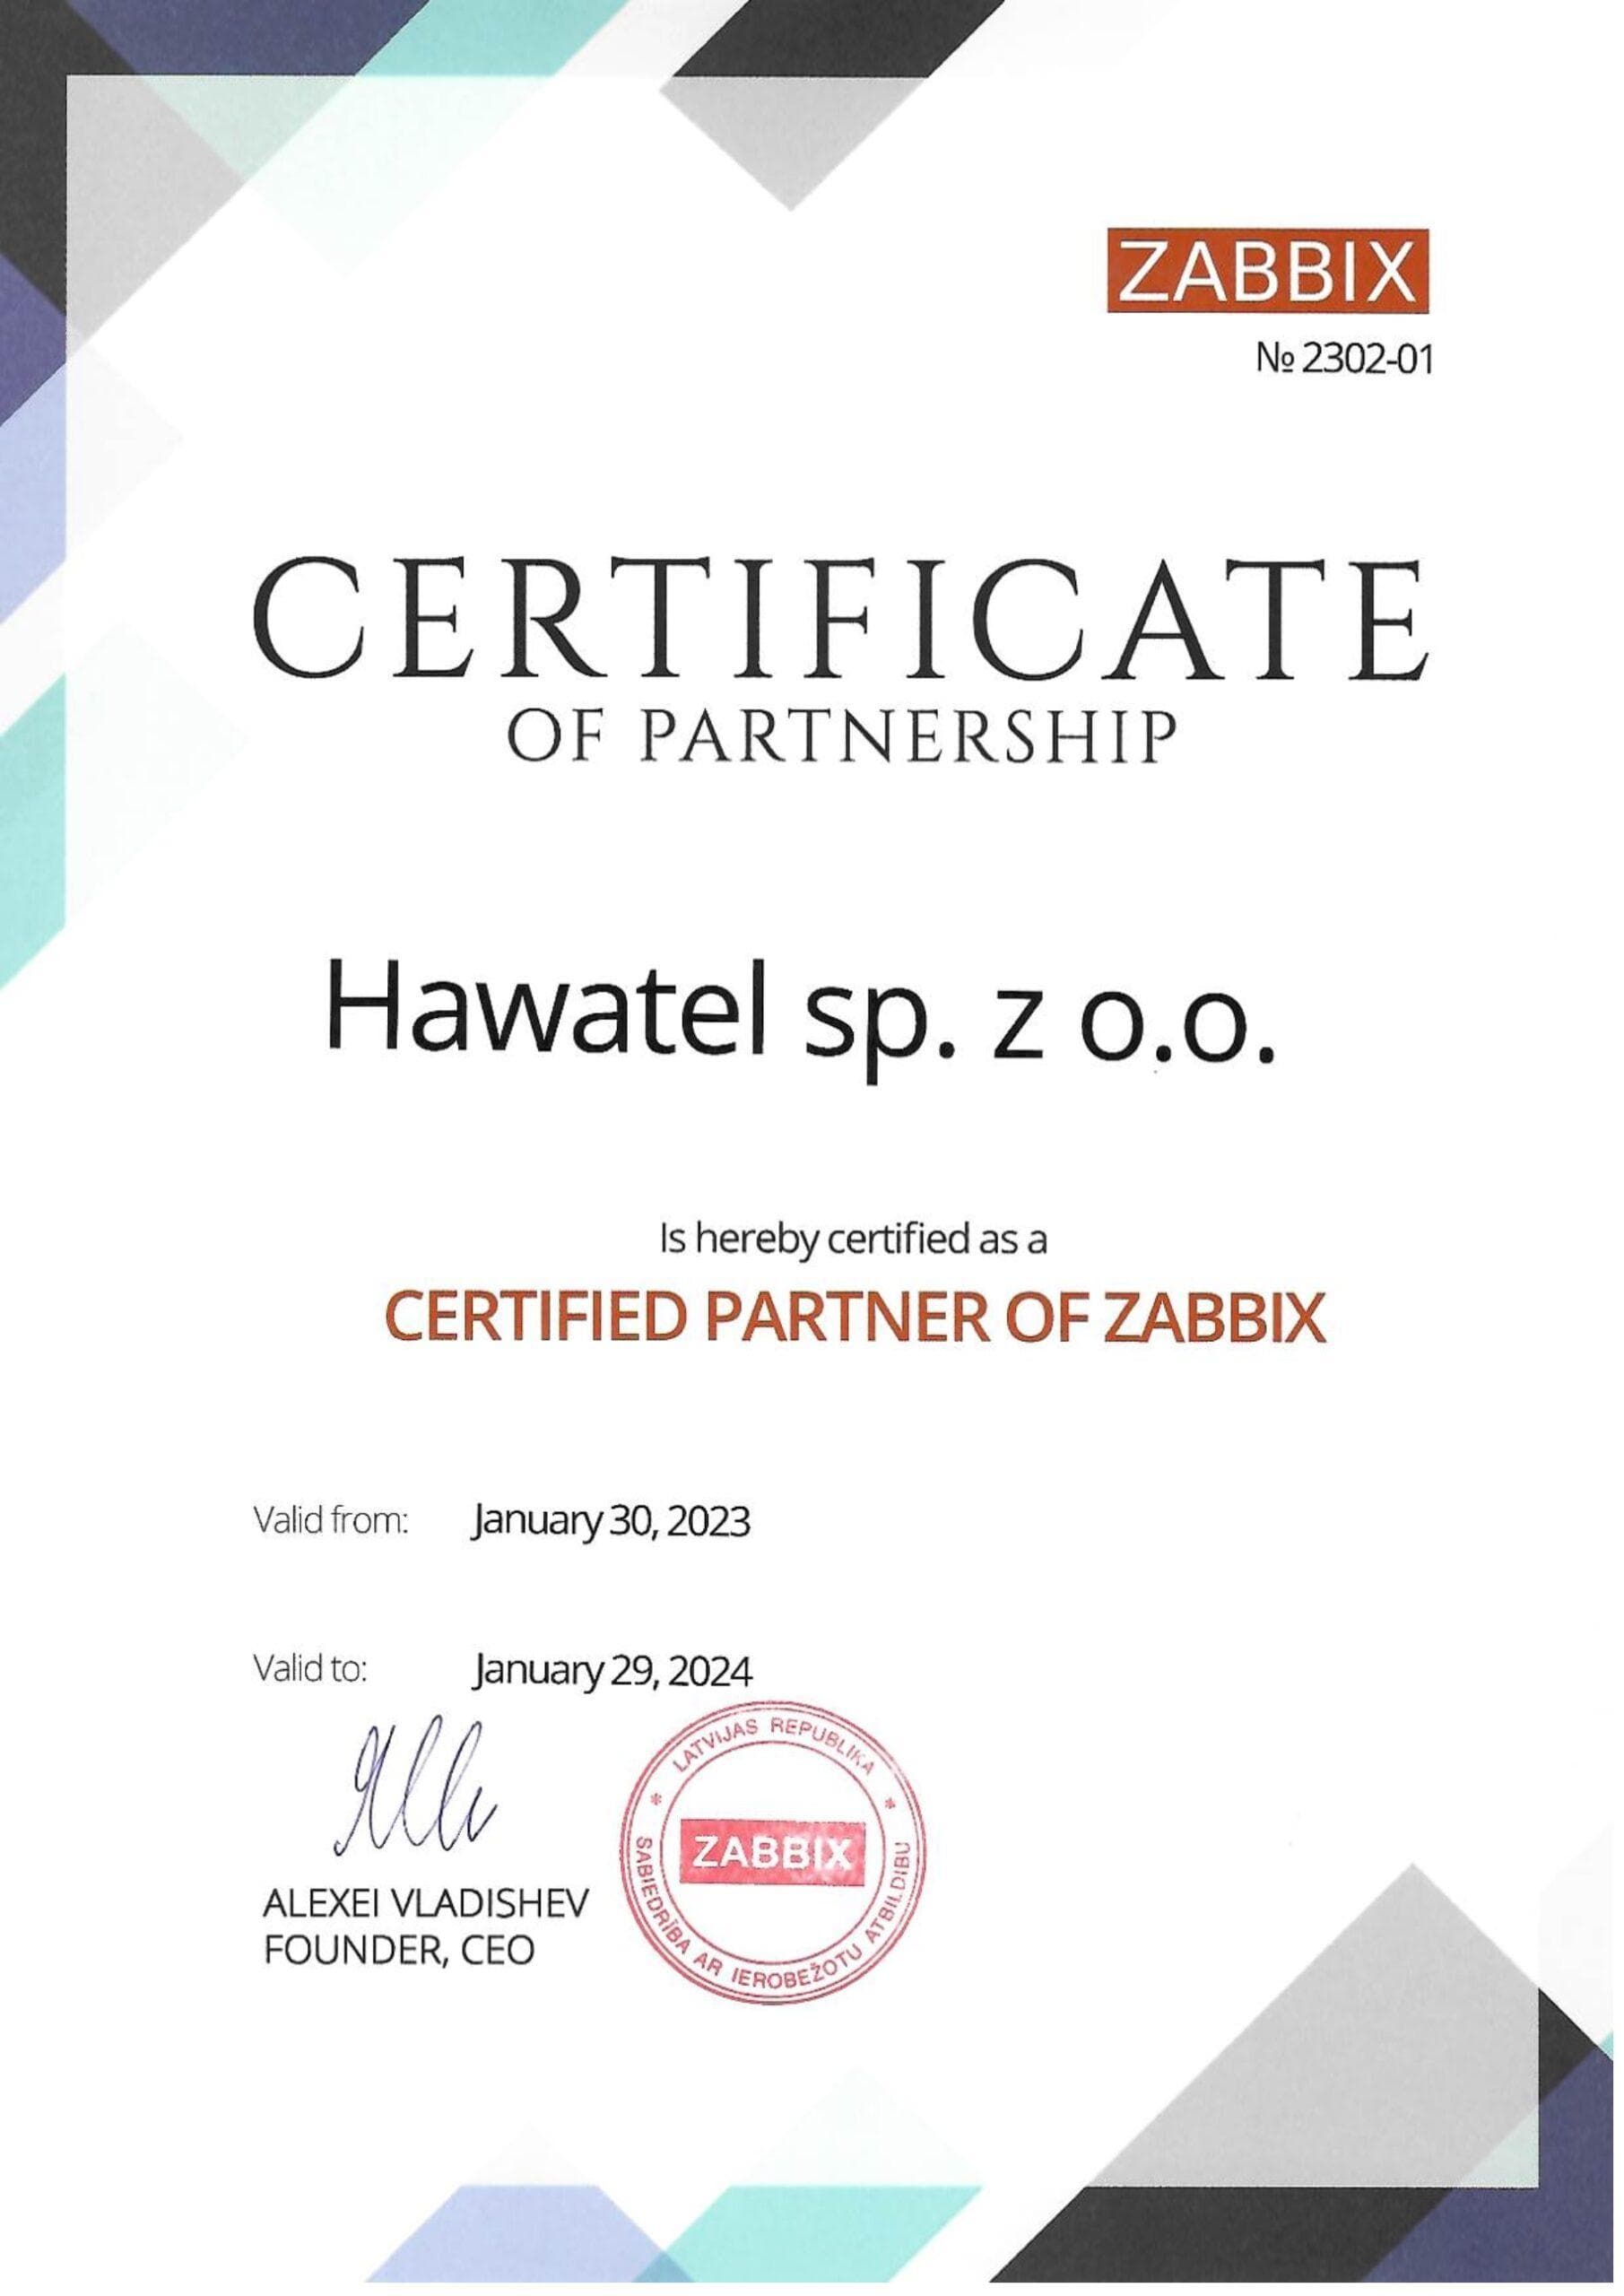 Zabbix certificate for Hawatel